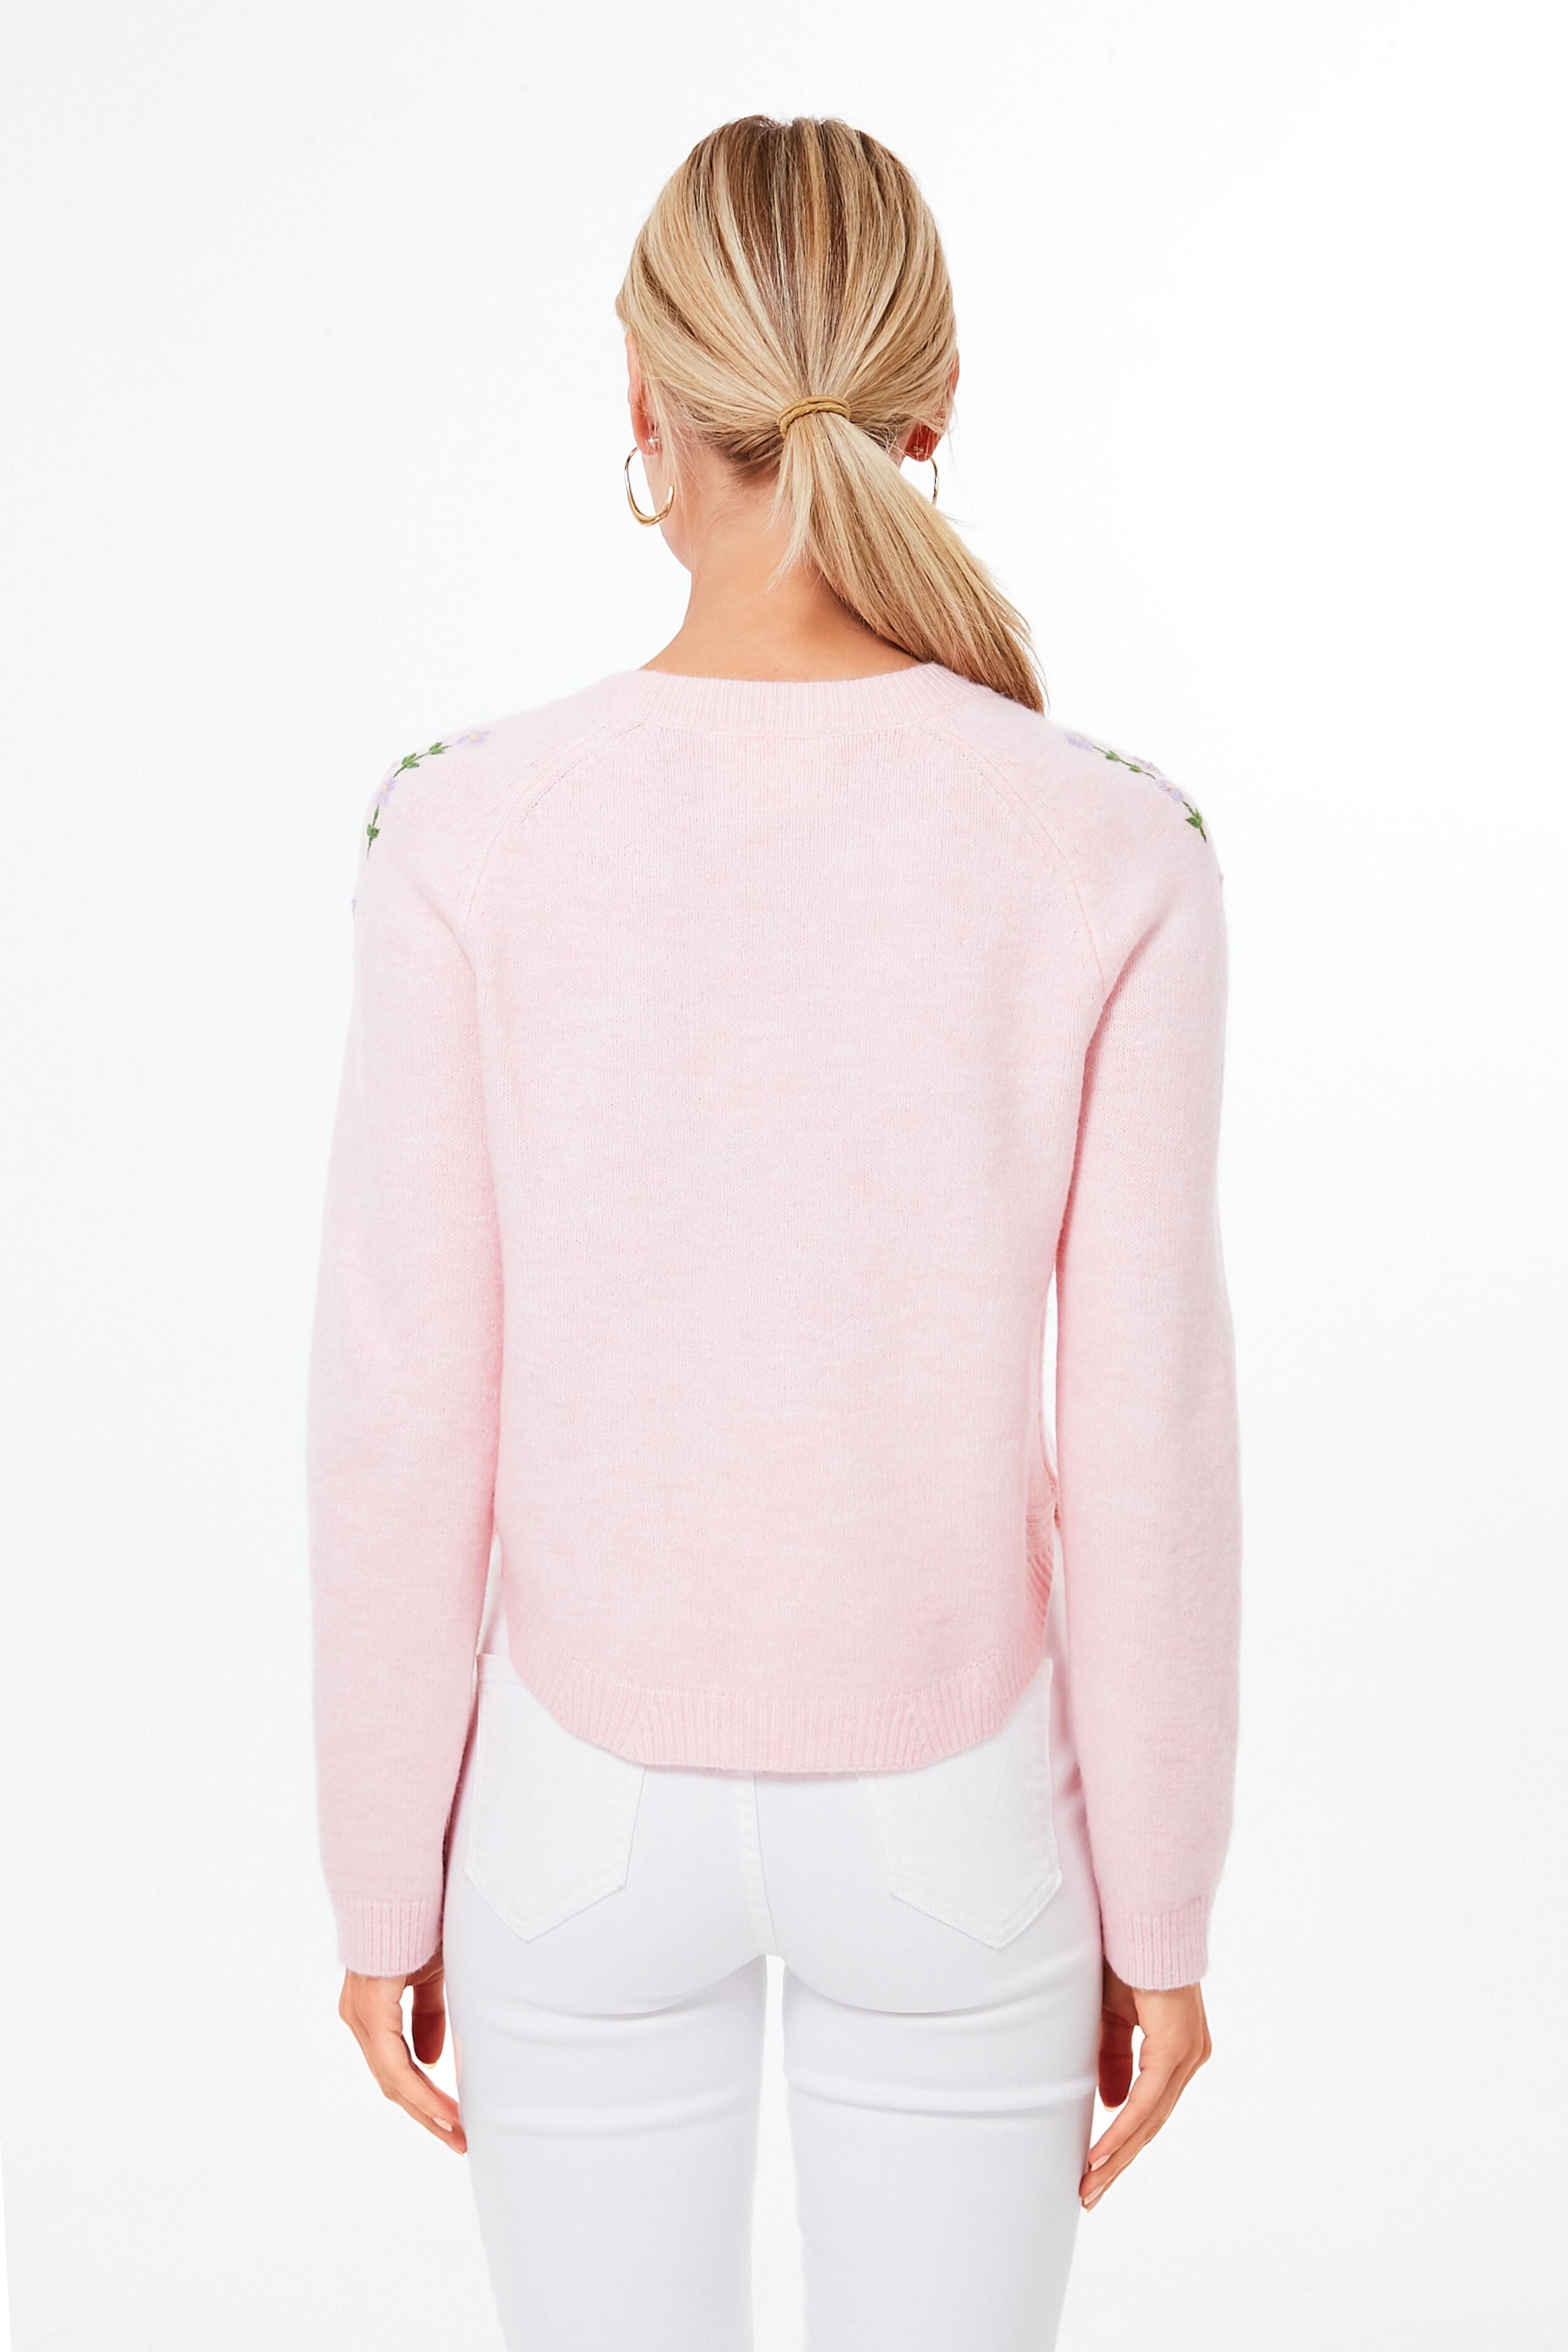 Namu Shop - ts(s) Lightweight Chambray Pullover Shirt Dress - Pink